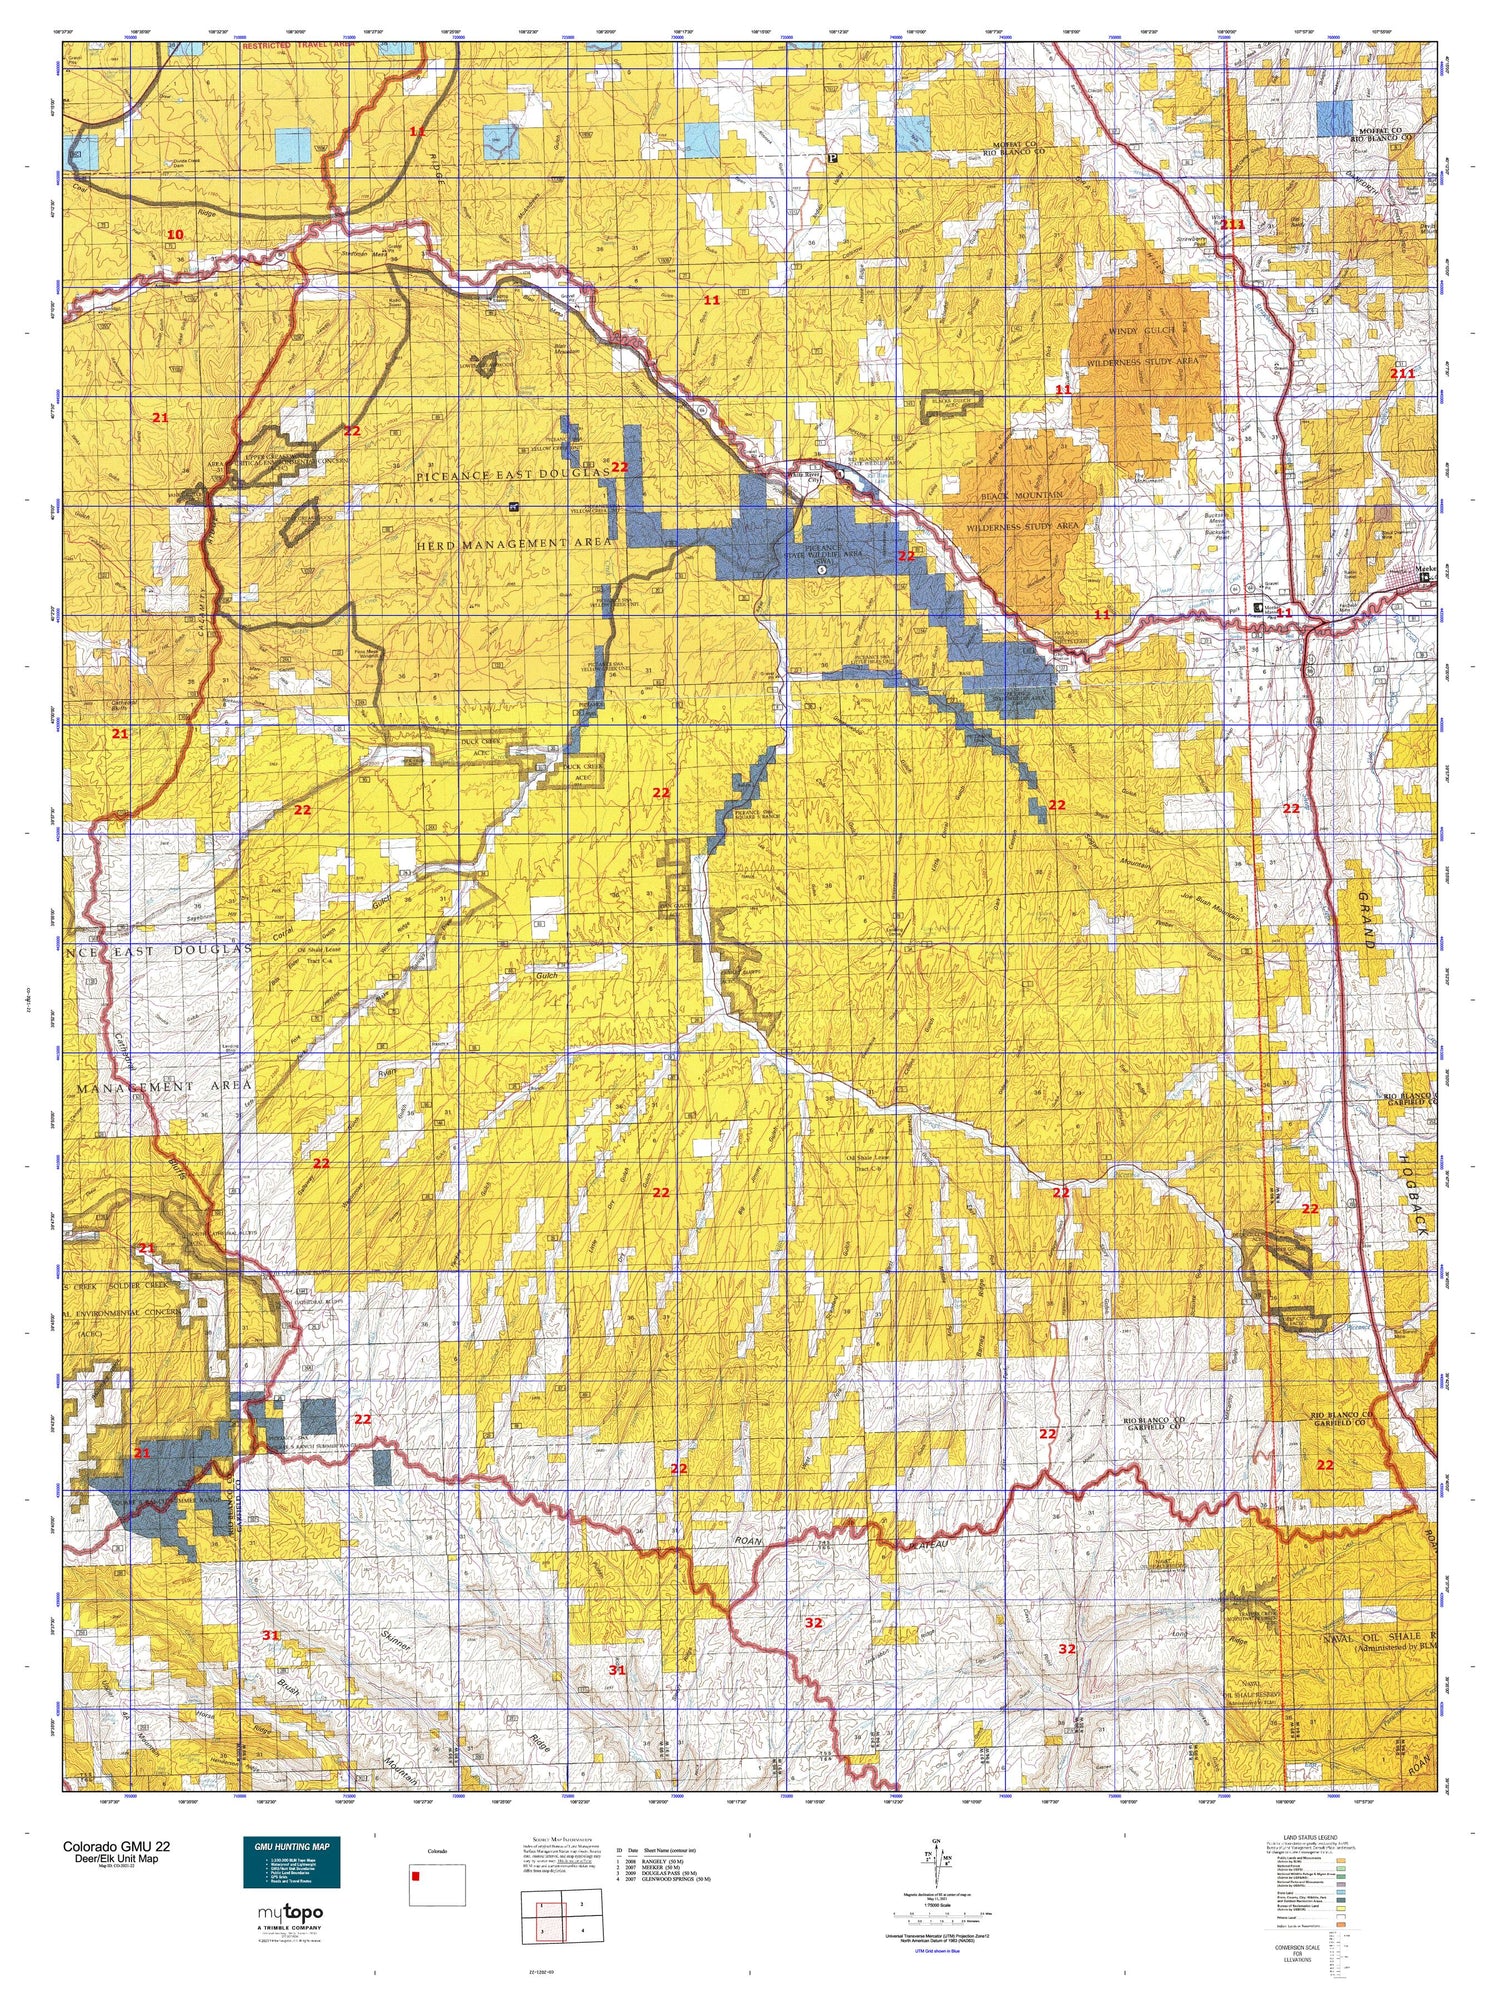 Colorado GMU 22 Map Image